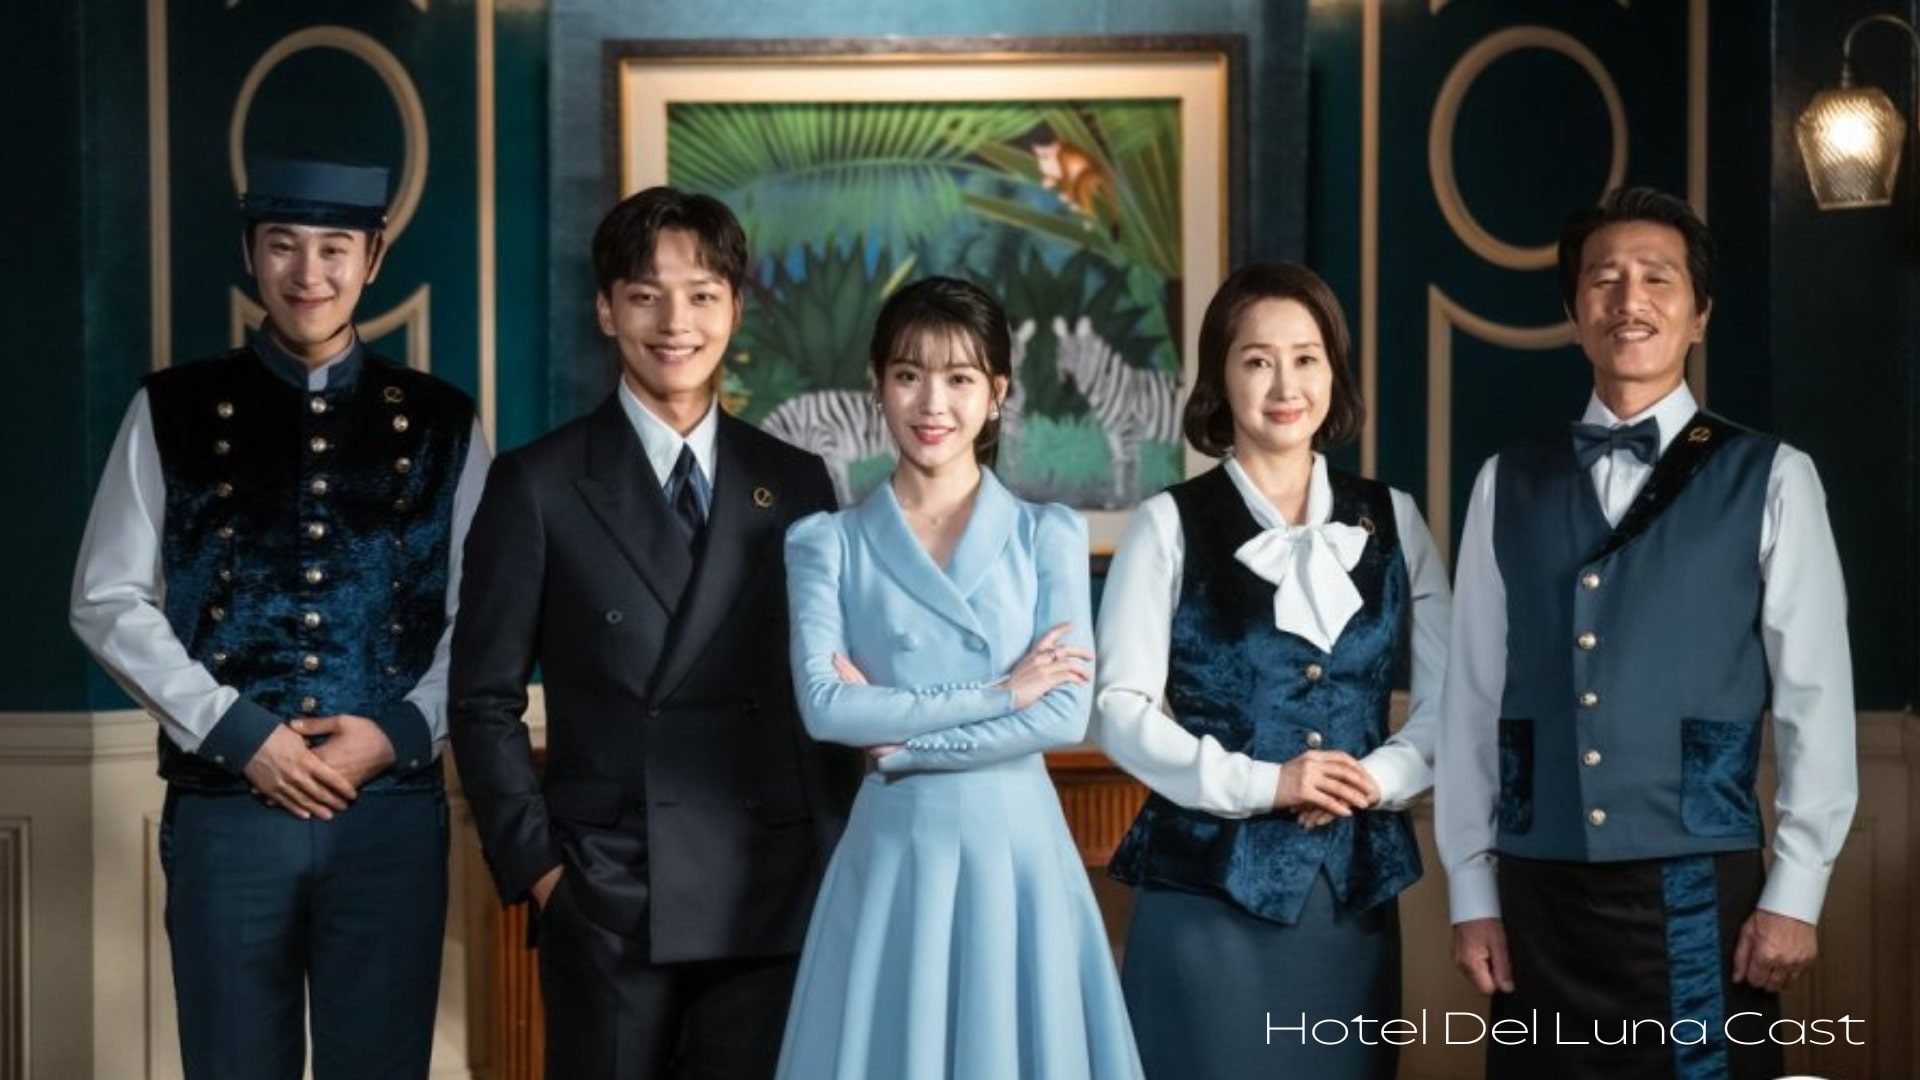 Hotel Del Luna Season 2: Release Date, Cast, & All Updates To Know